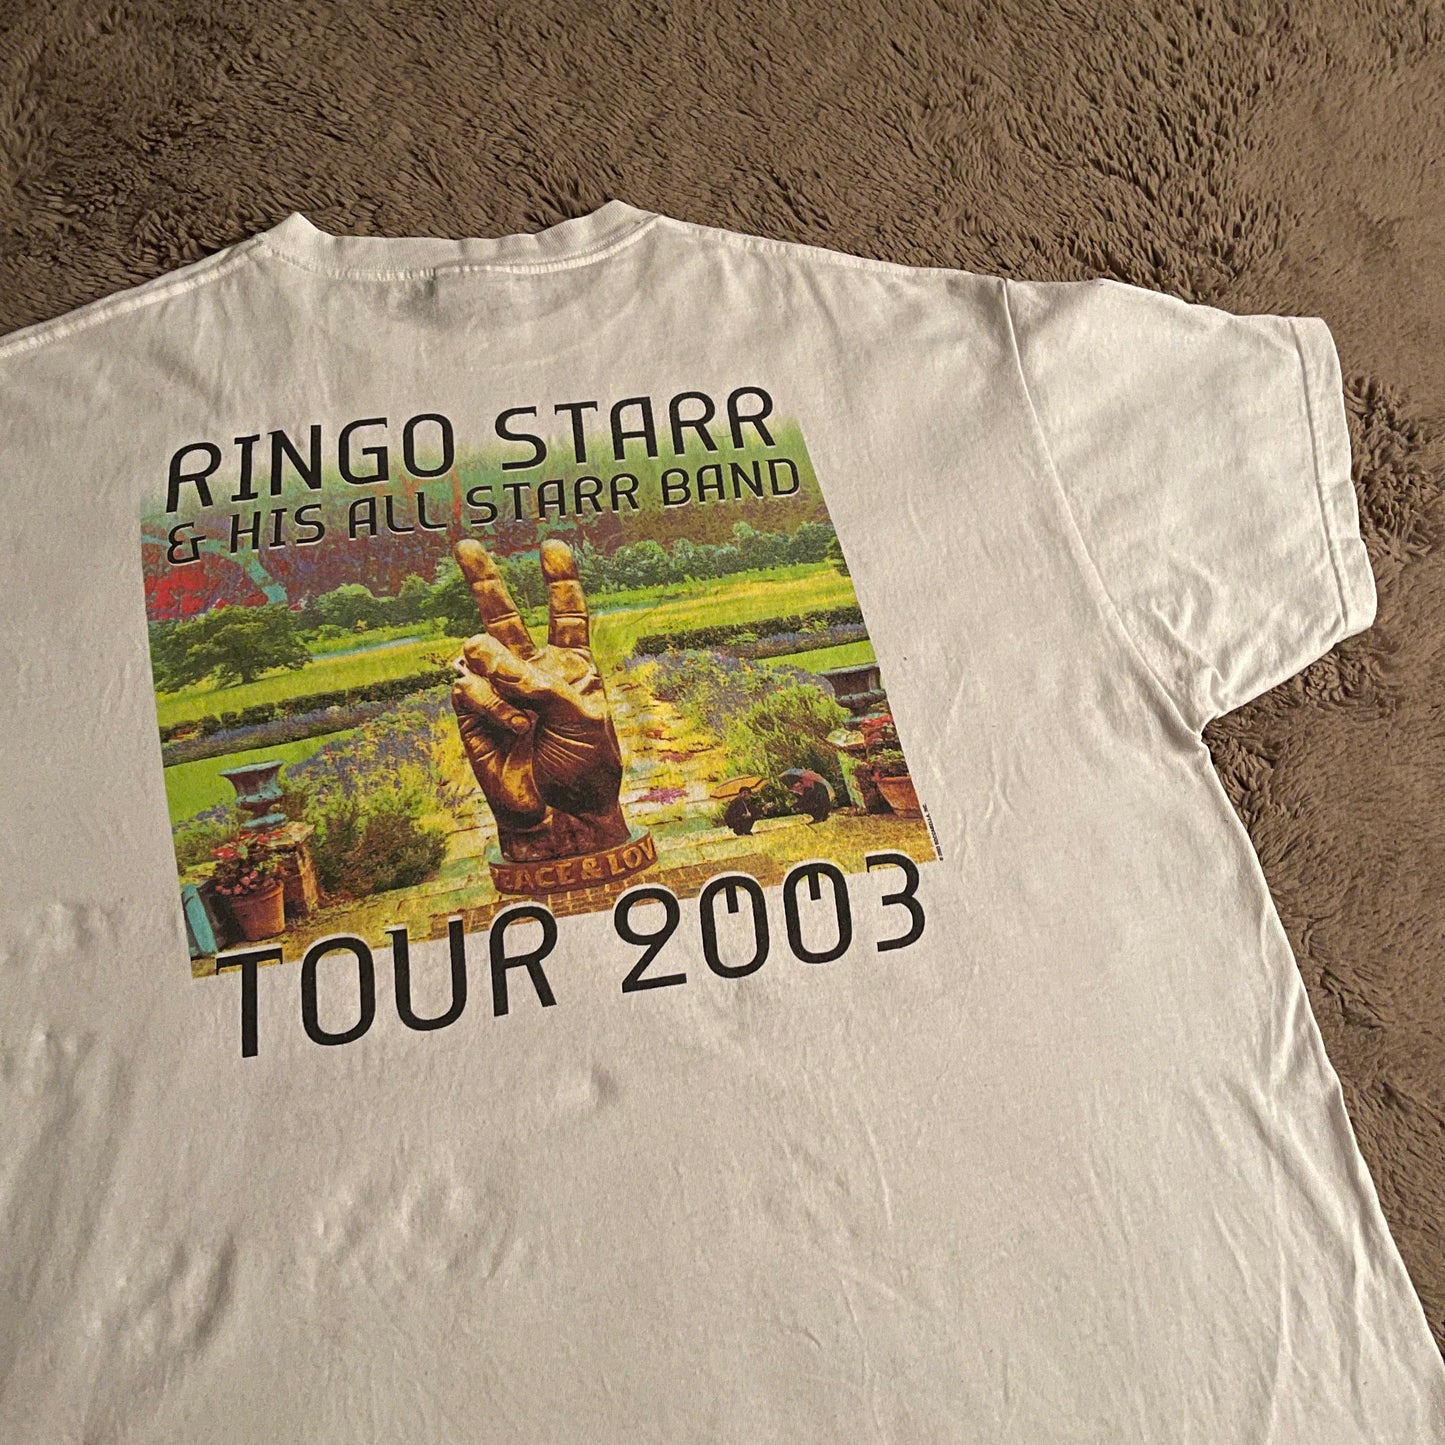 RARE VINTAGE Ringo Starr (Stain Glass Design) 2003 Tour Shirt (XL)